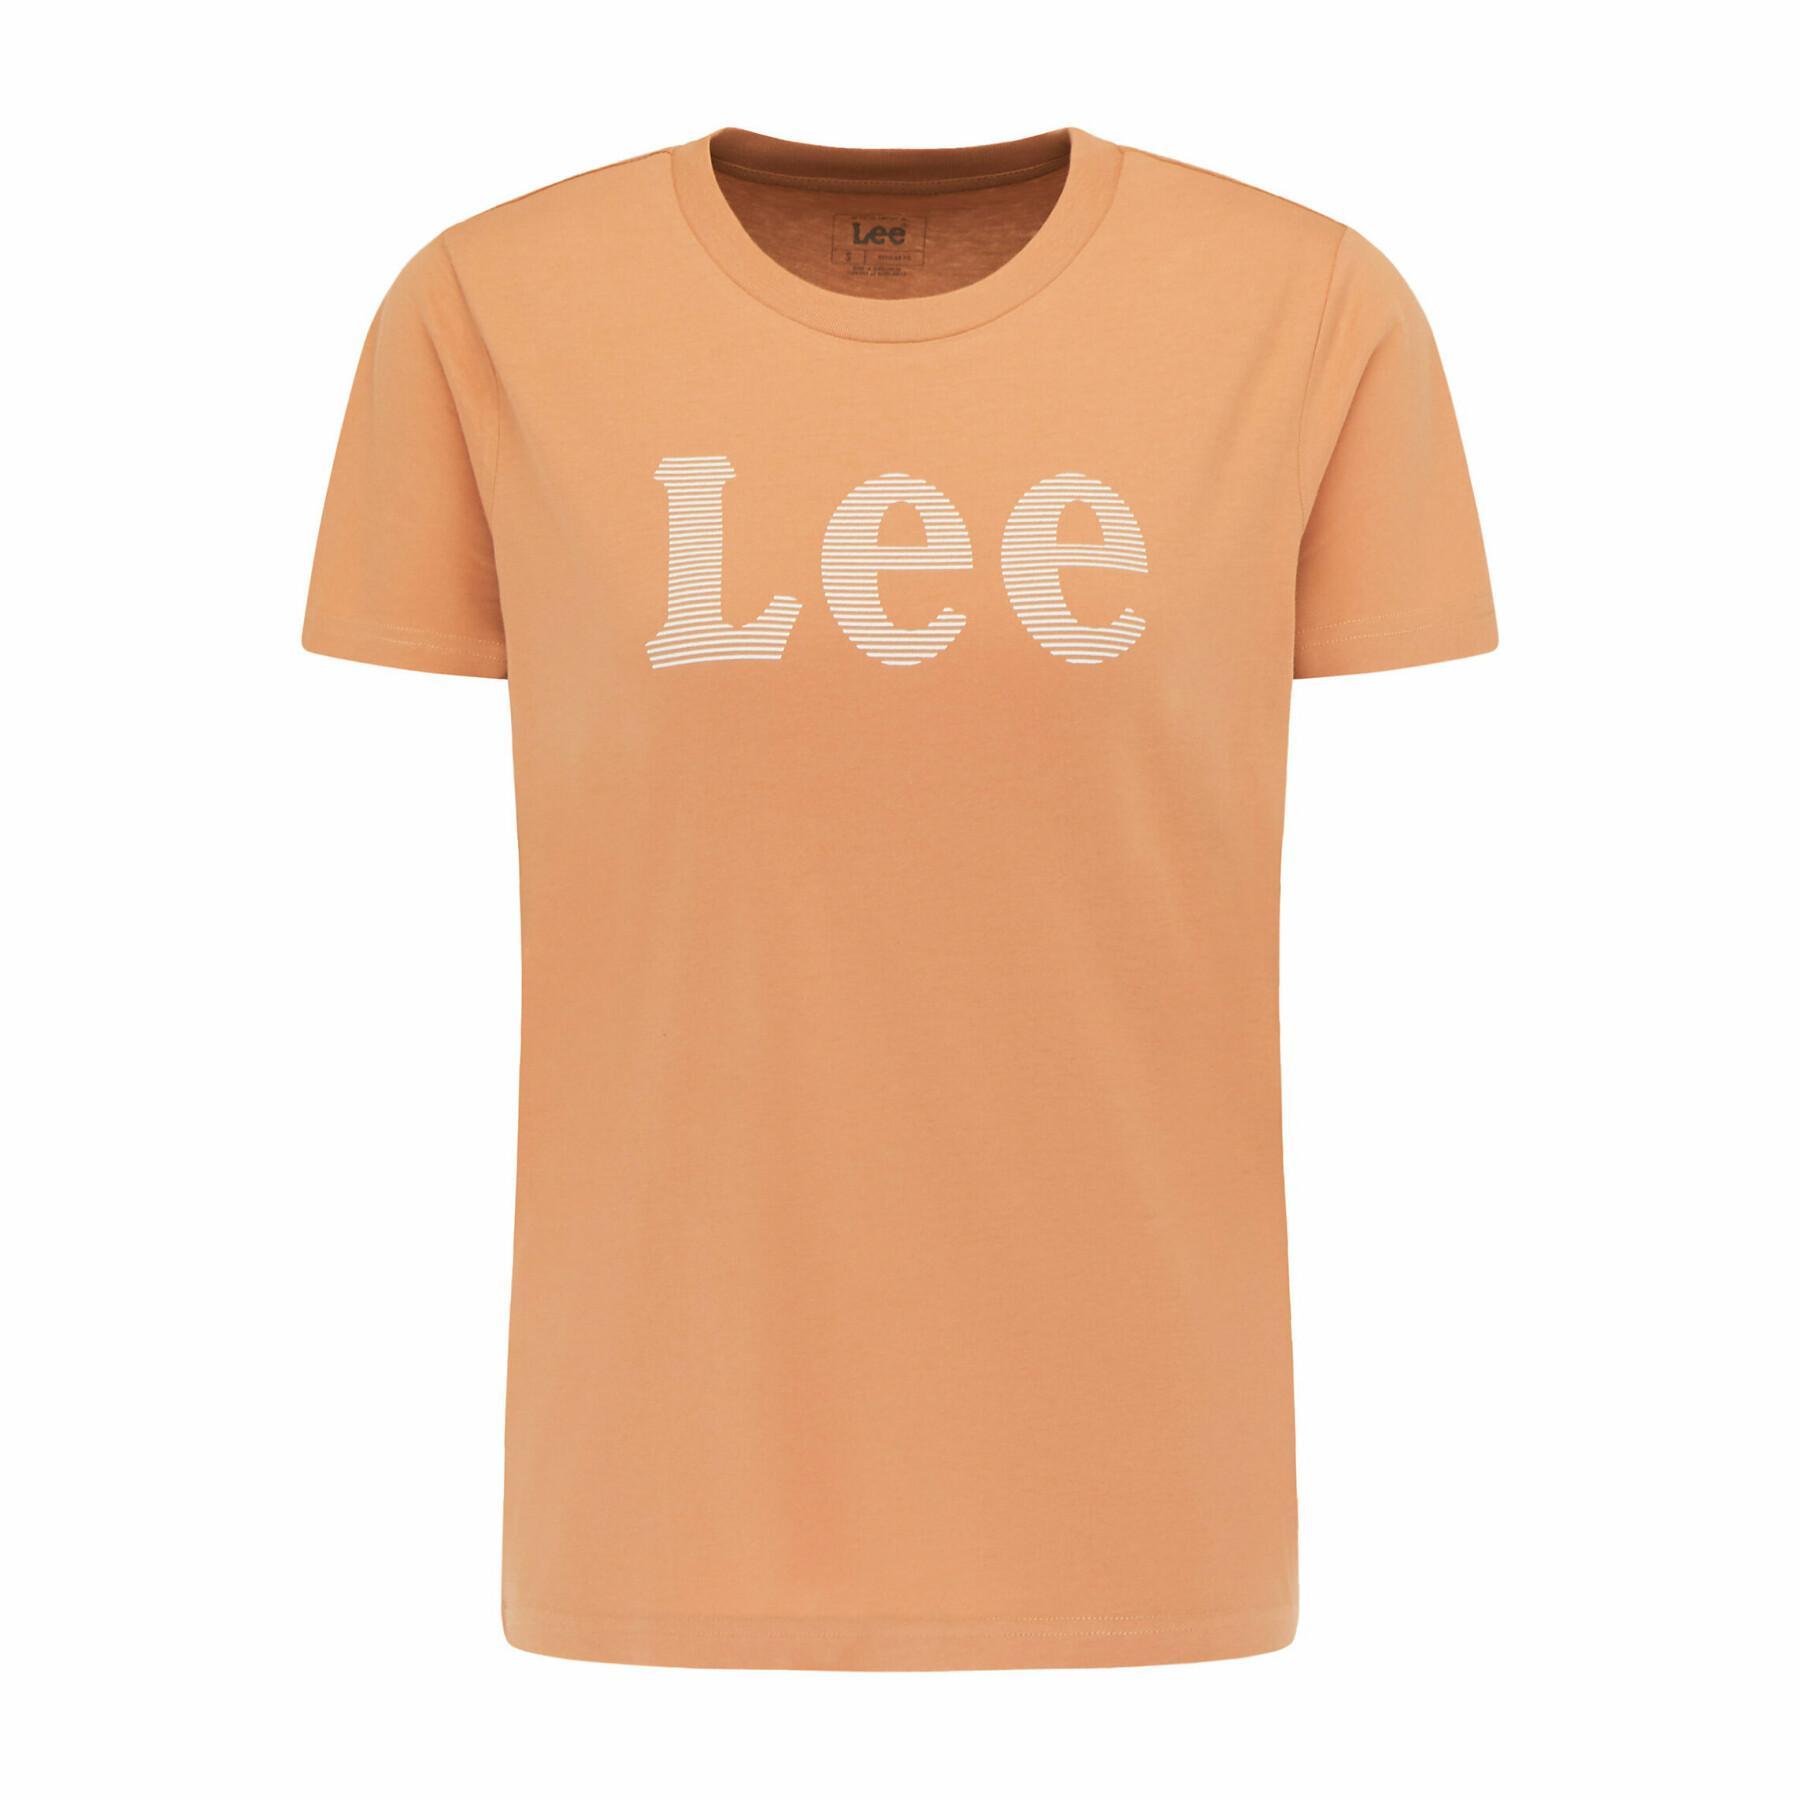 Vrouwen T-shirt Lee